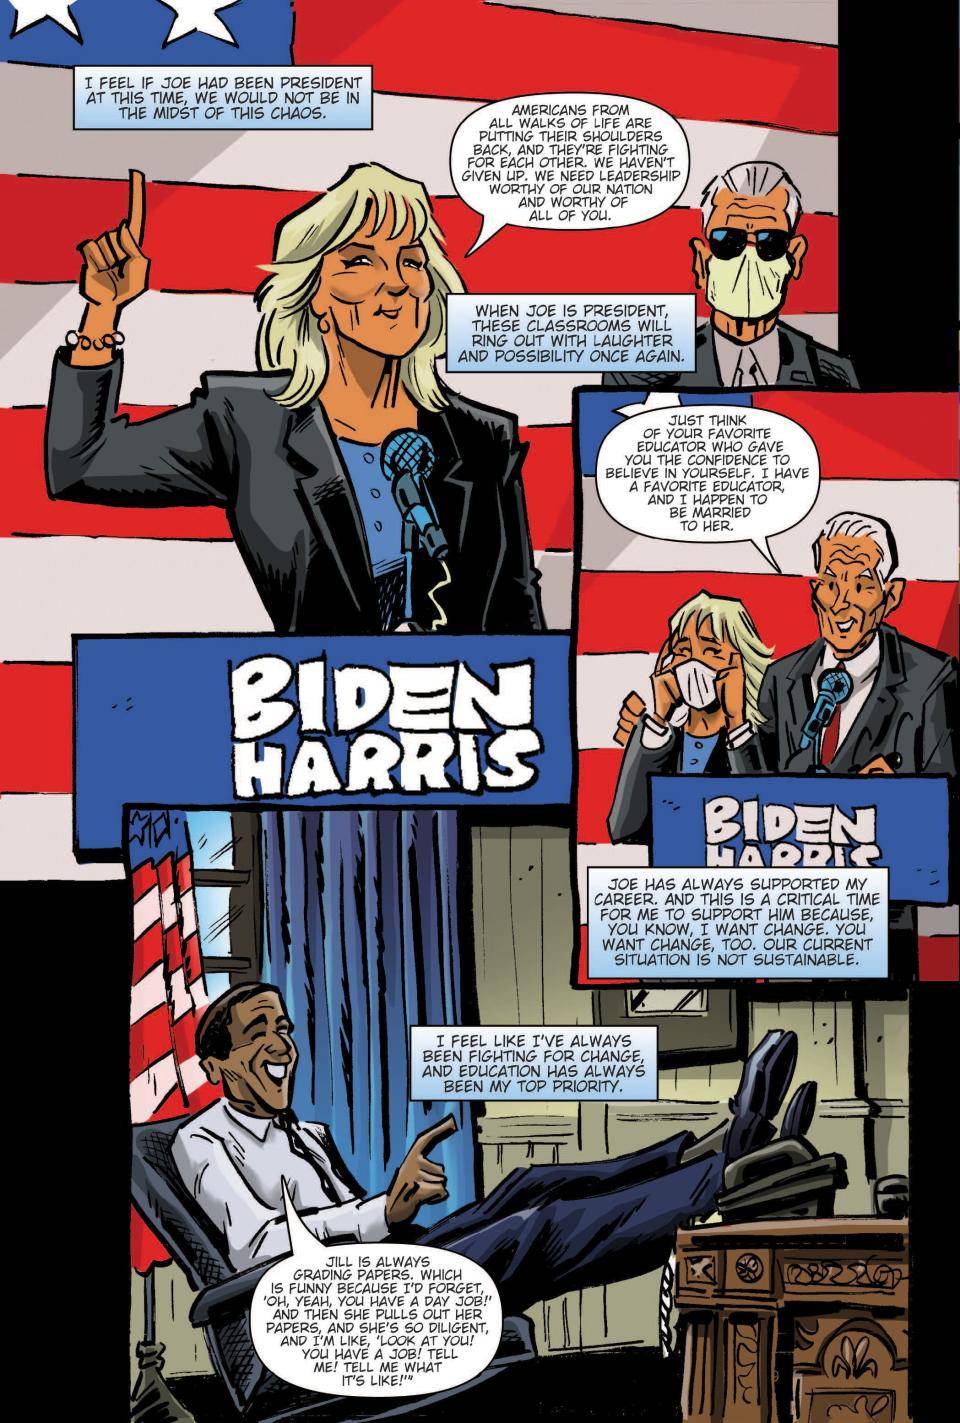 "Female Force: Jill Biden" is a biography comic book on first lady Jill Biden.